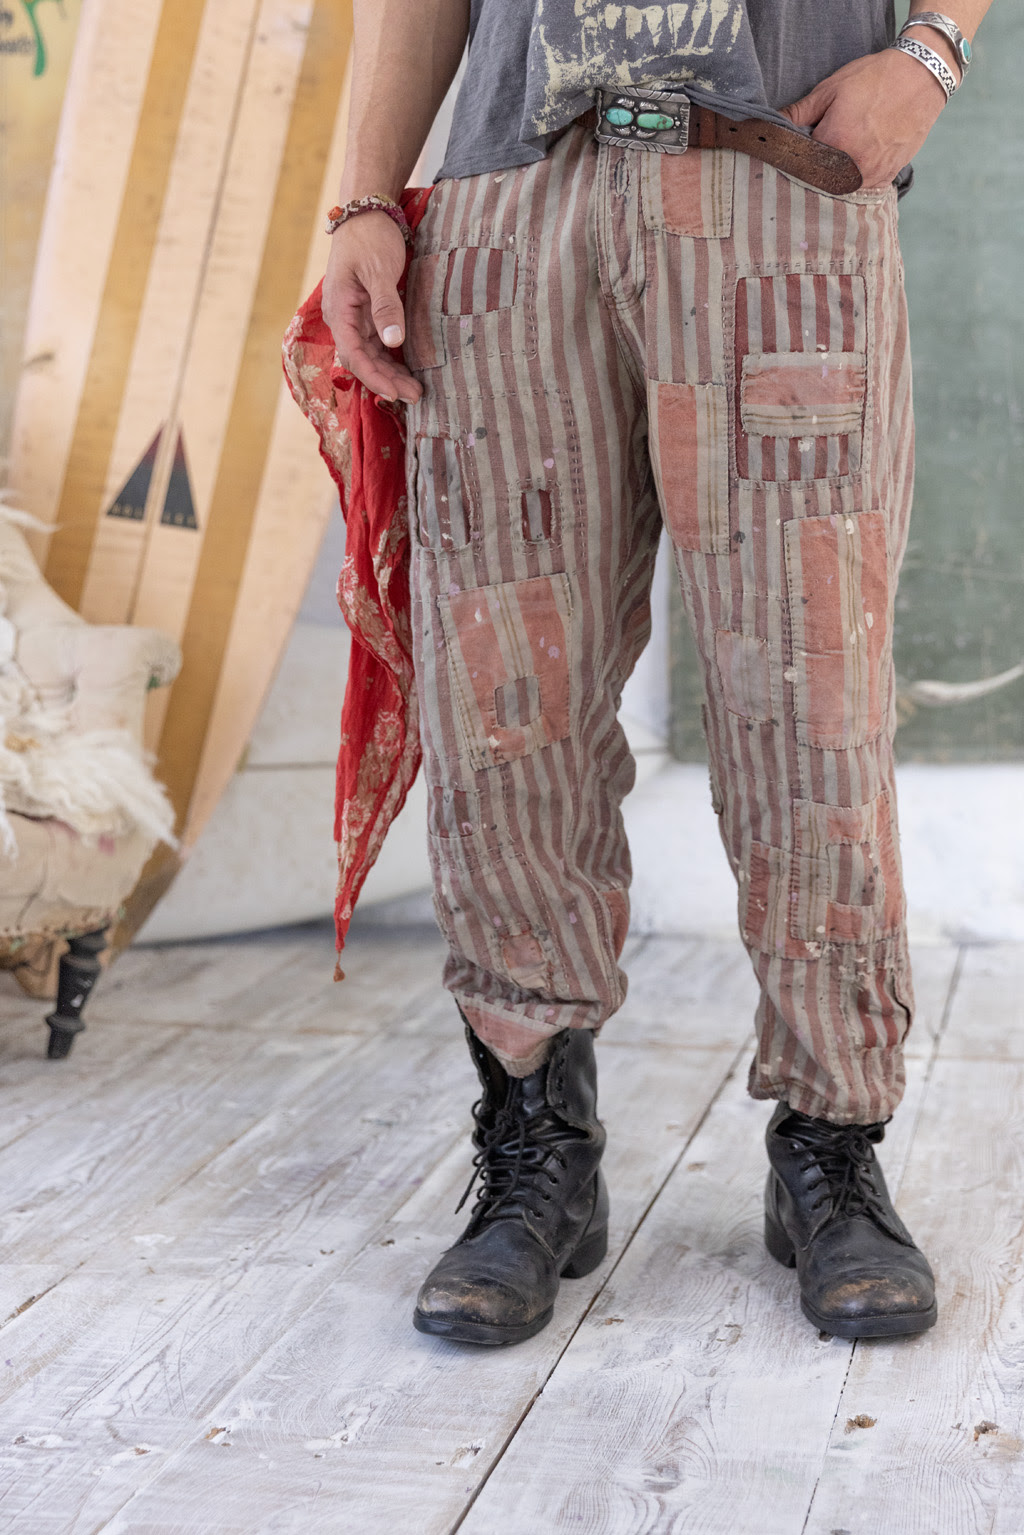 Striped Miner Pants